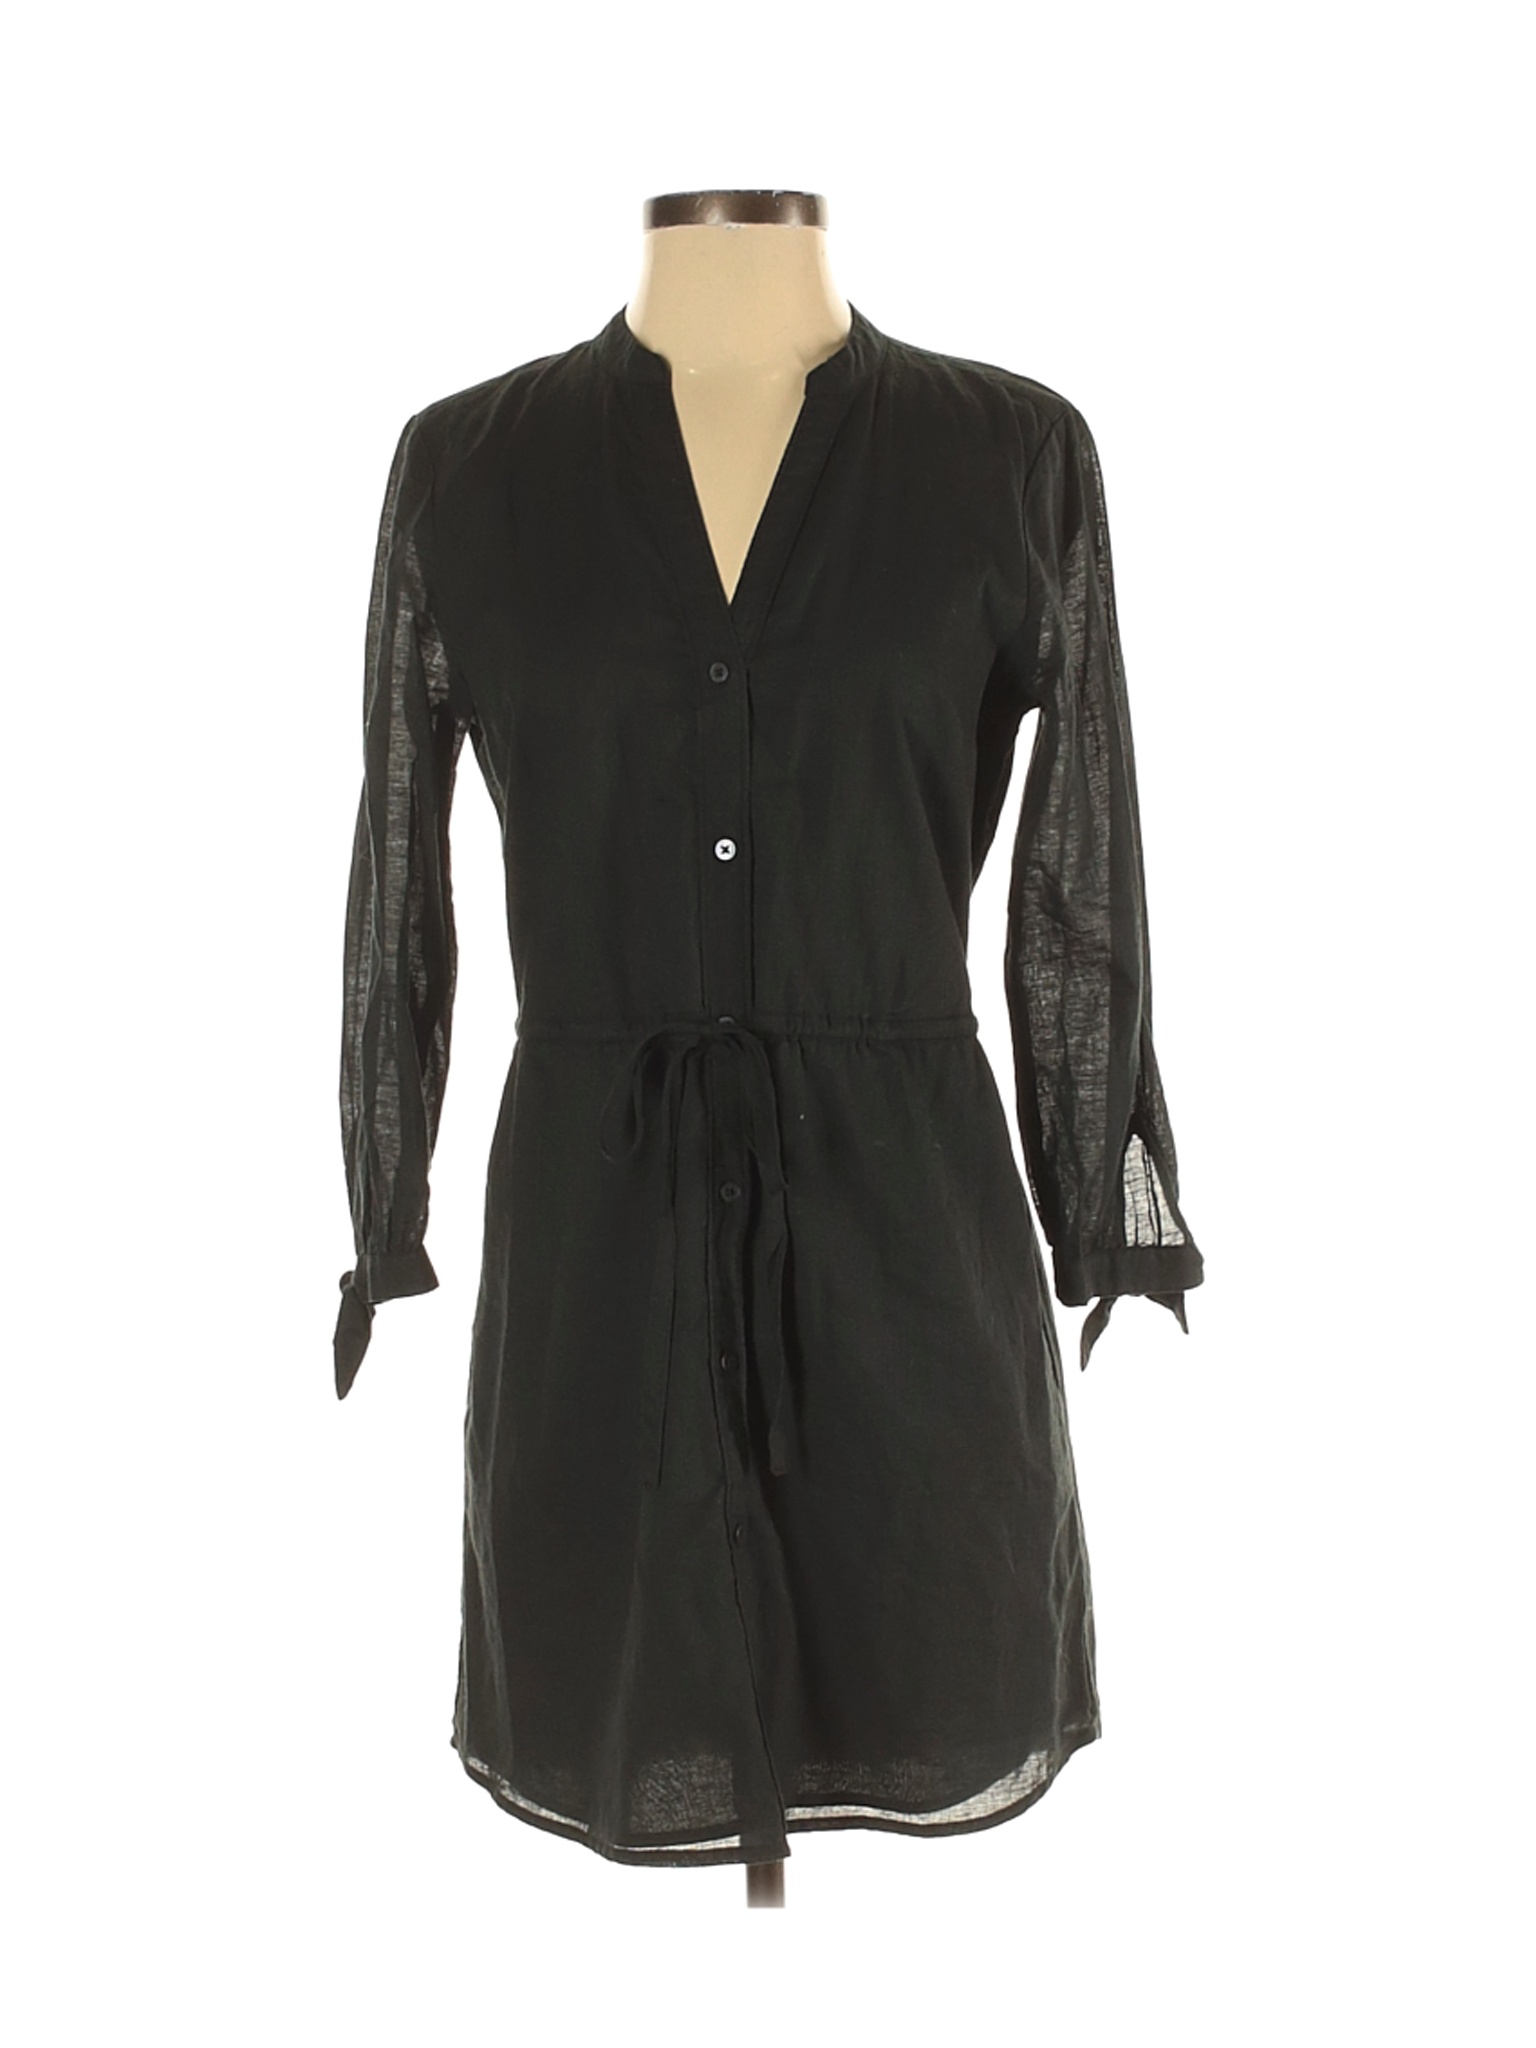 Abercrombie & Fitch Women Black Casual Dress XS | eBay